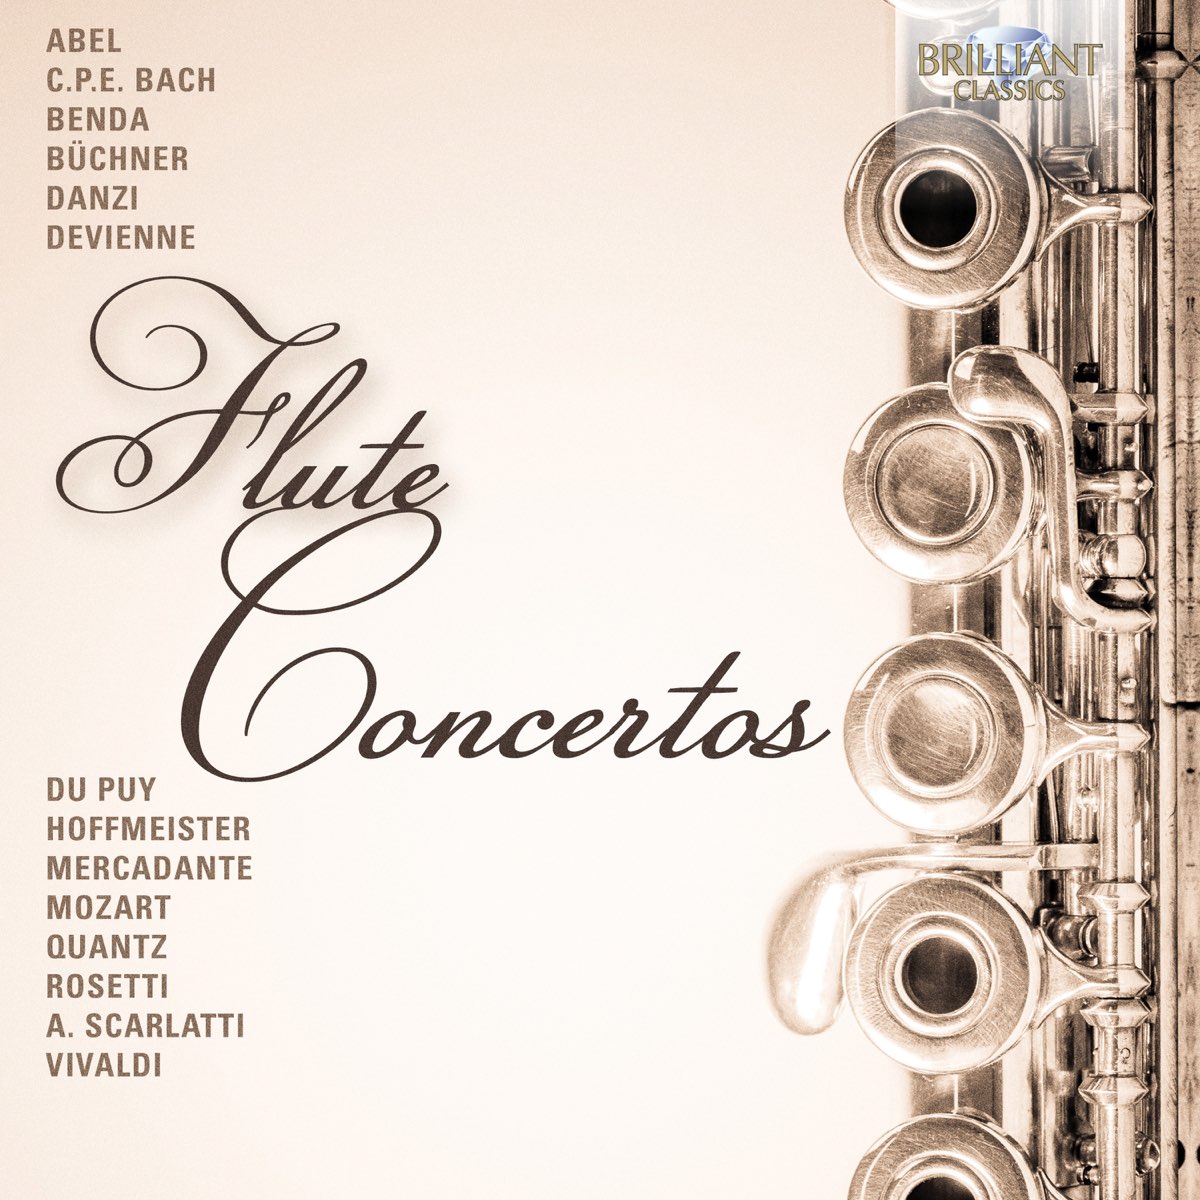 Flute Concerto.. Quantz - Flute Concertos, QV 5 - Johannes Walter.